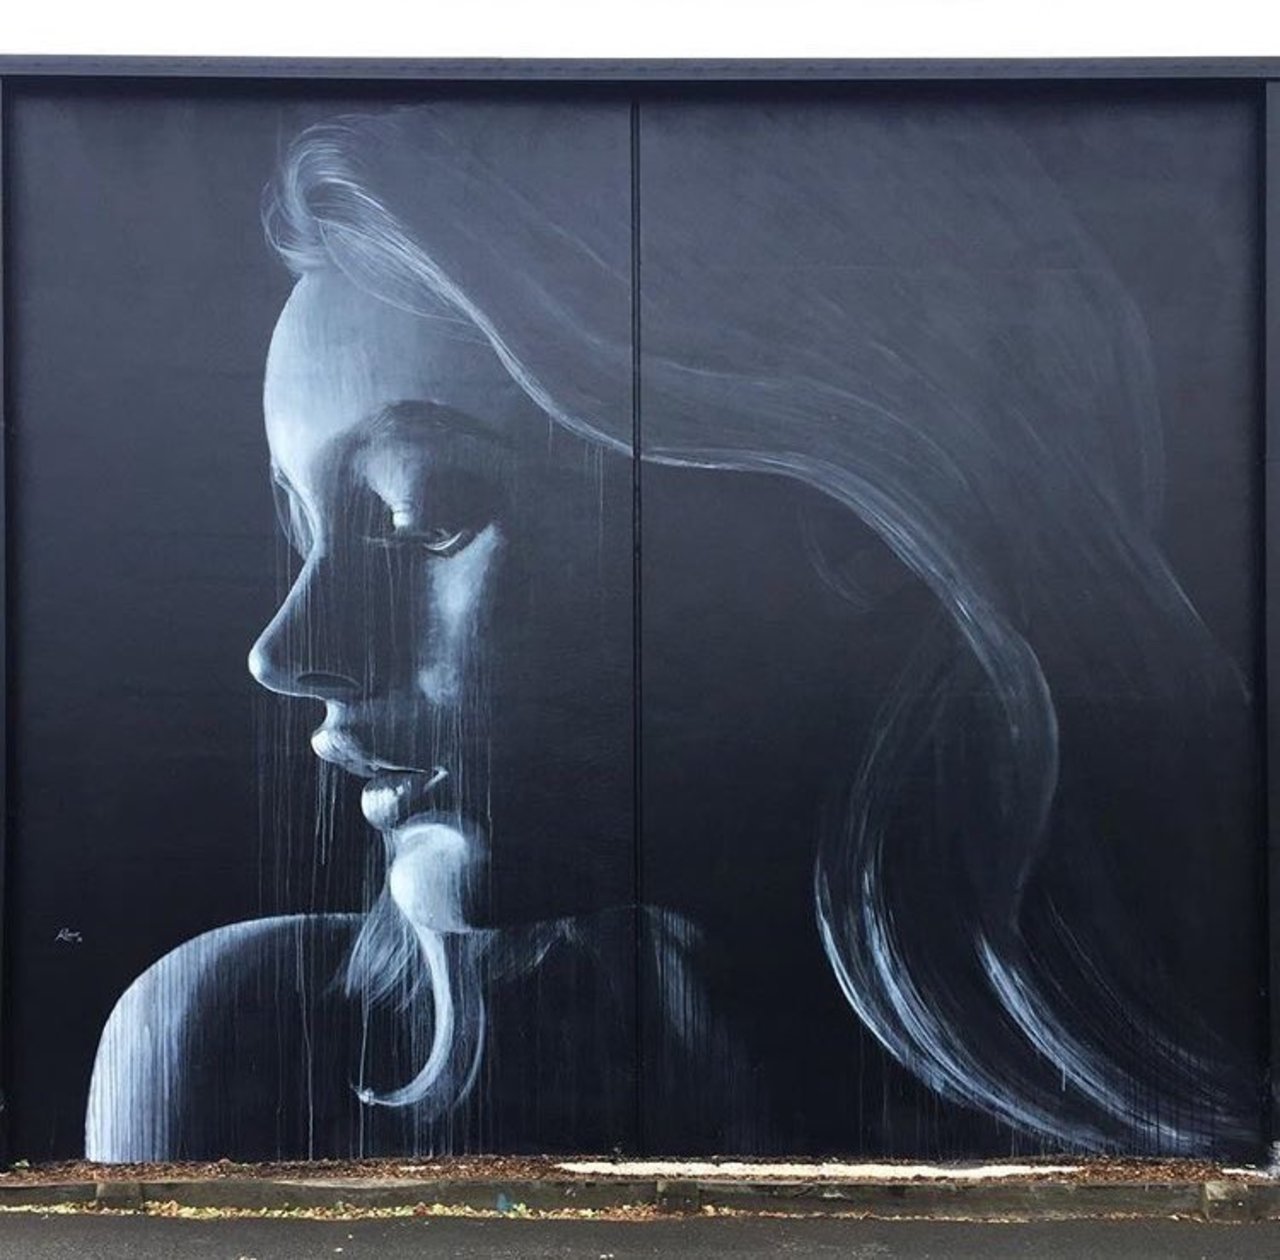 #mural by RONE #Melbourne #Australia #art #graffiti #streetart https://t.co/Pj2Agq27Z0